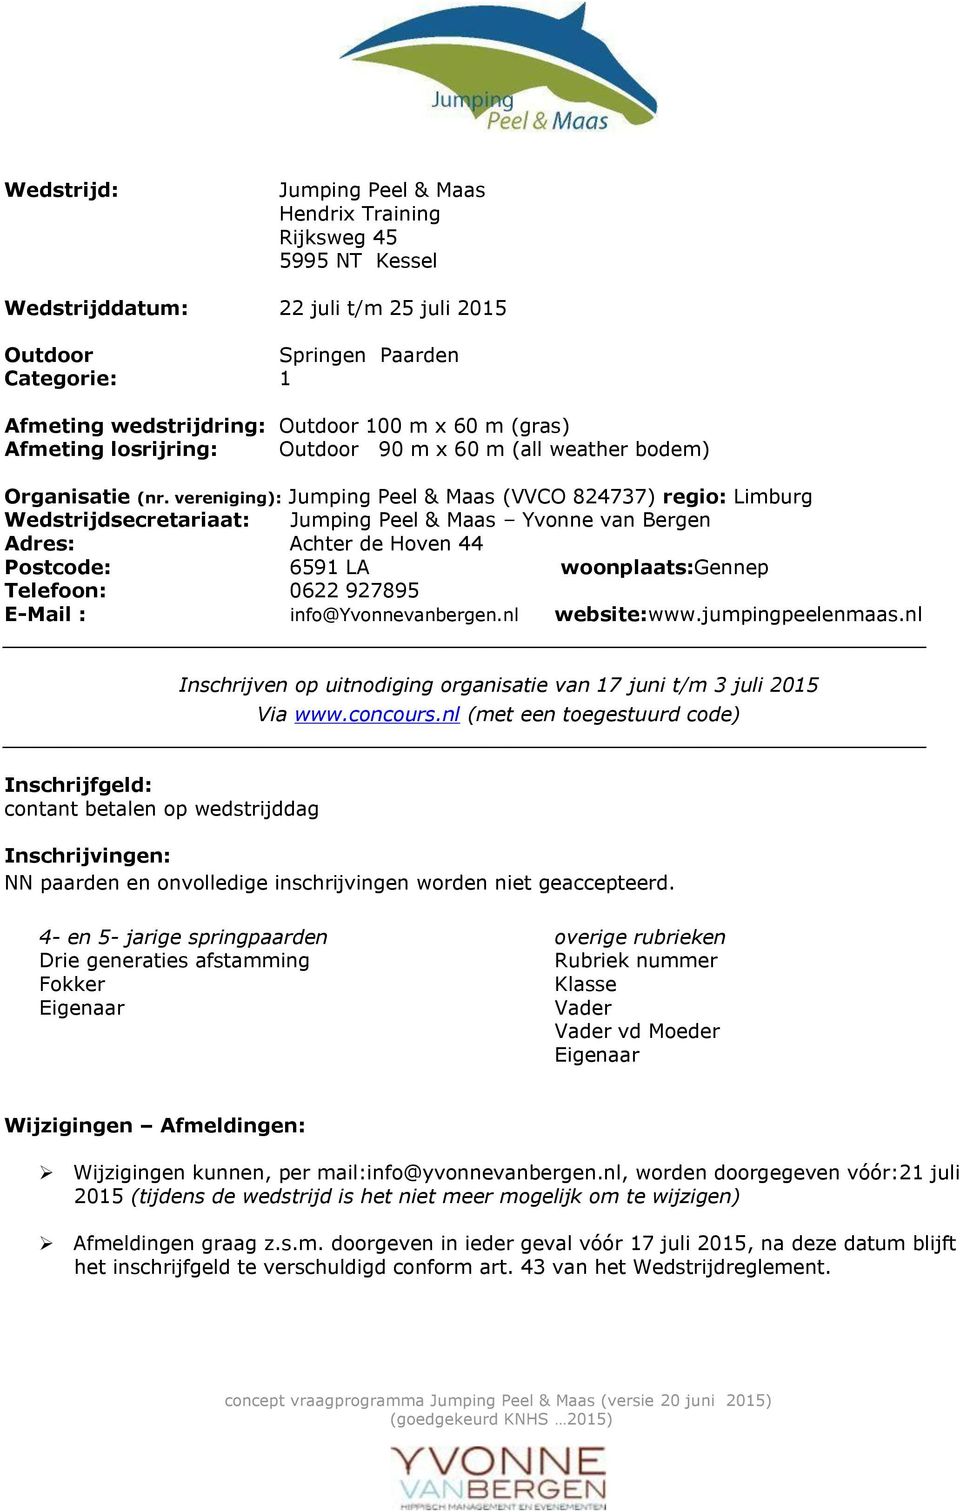 vereniging): Jumping Peel & Maas (VVCO 824737) regio: Limburg Wedstrijdsecretariaat: Jumping Peel & Maas Yvonne van Bergen Adres: Achter de Hoven 44 Postcode: 6591 LA woonplaats:gennep Telefoon: 0622